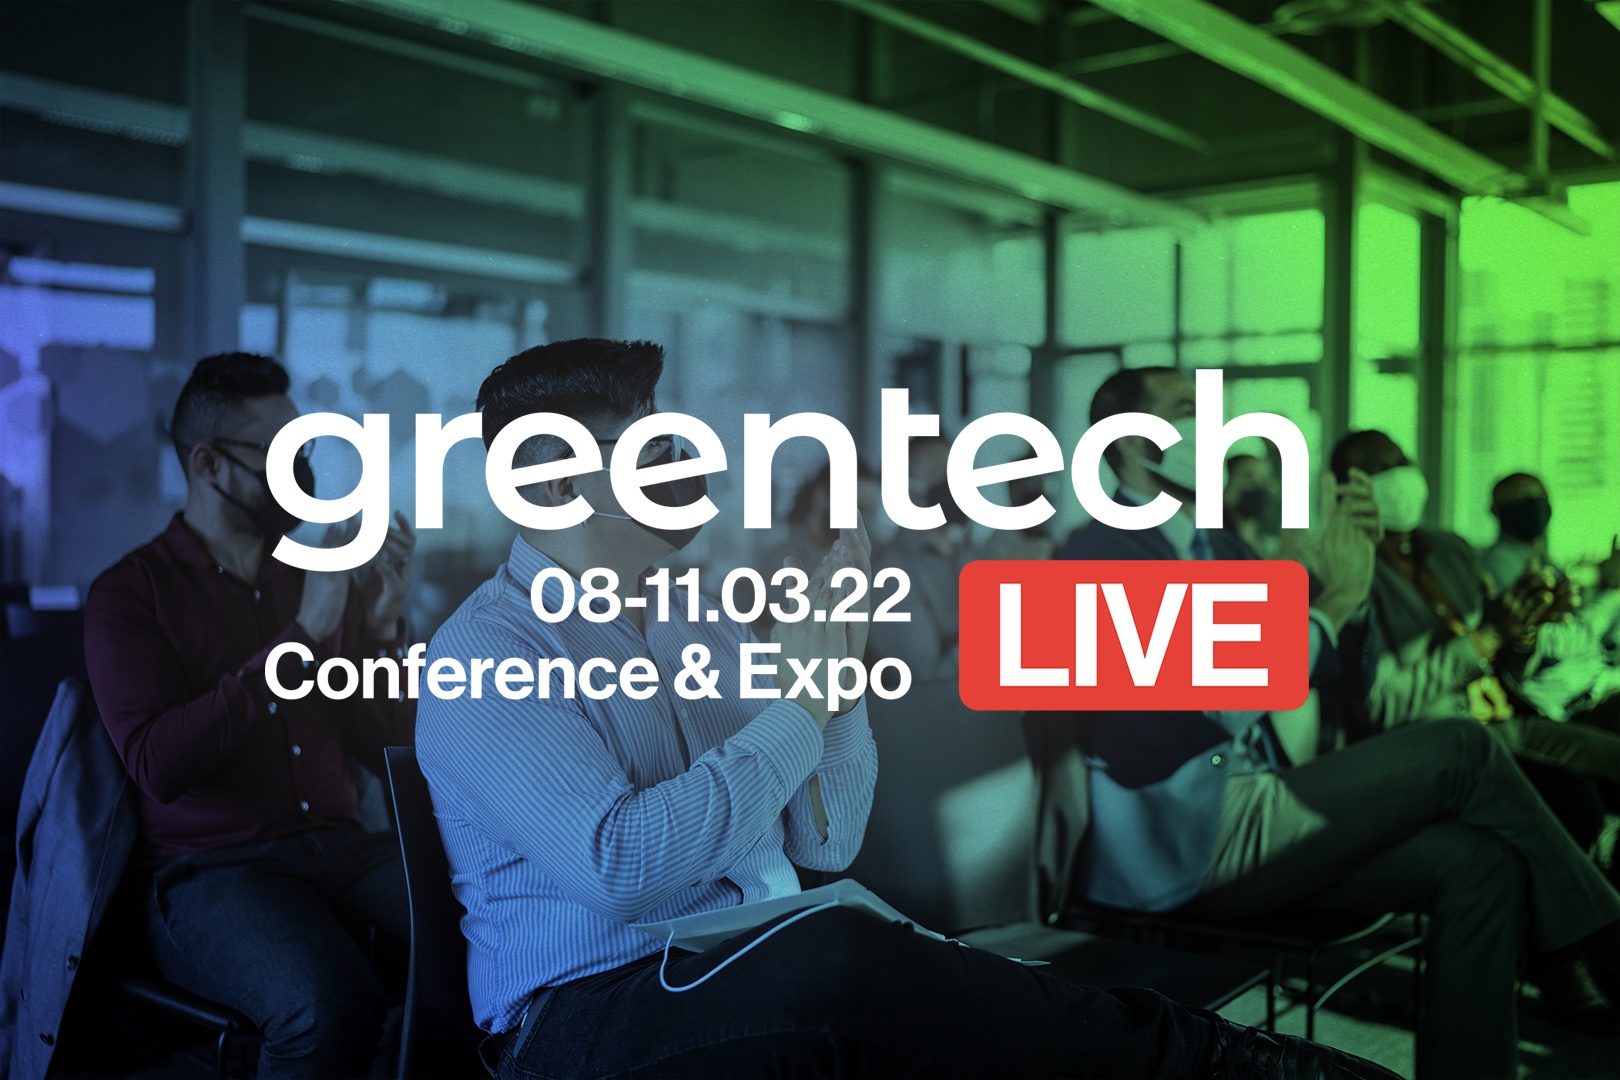 Greentech Live Conference & Expo - GREENTECH.LIVE english